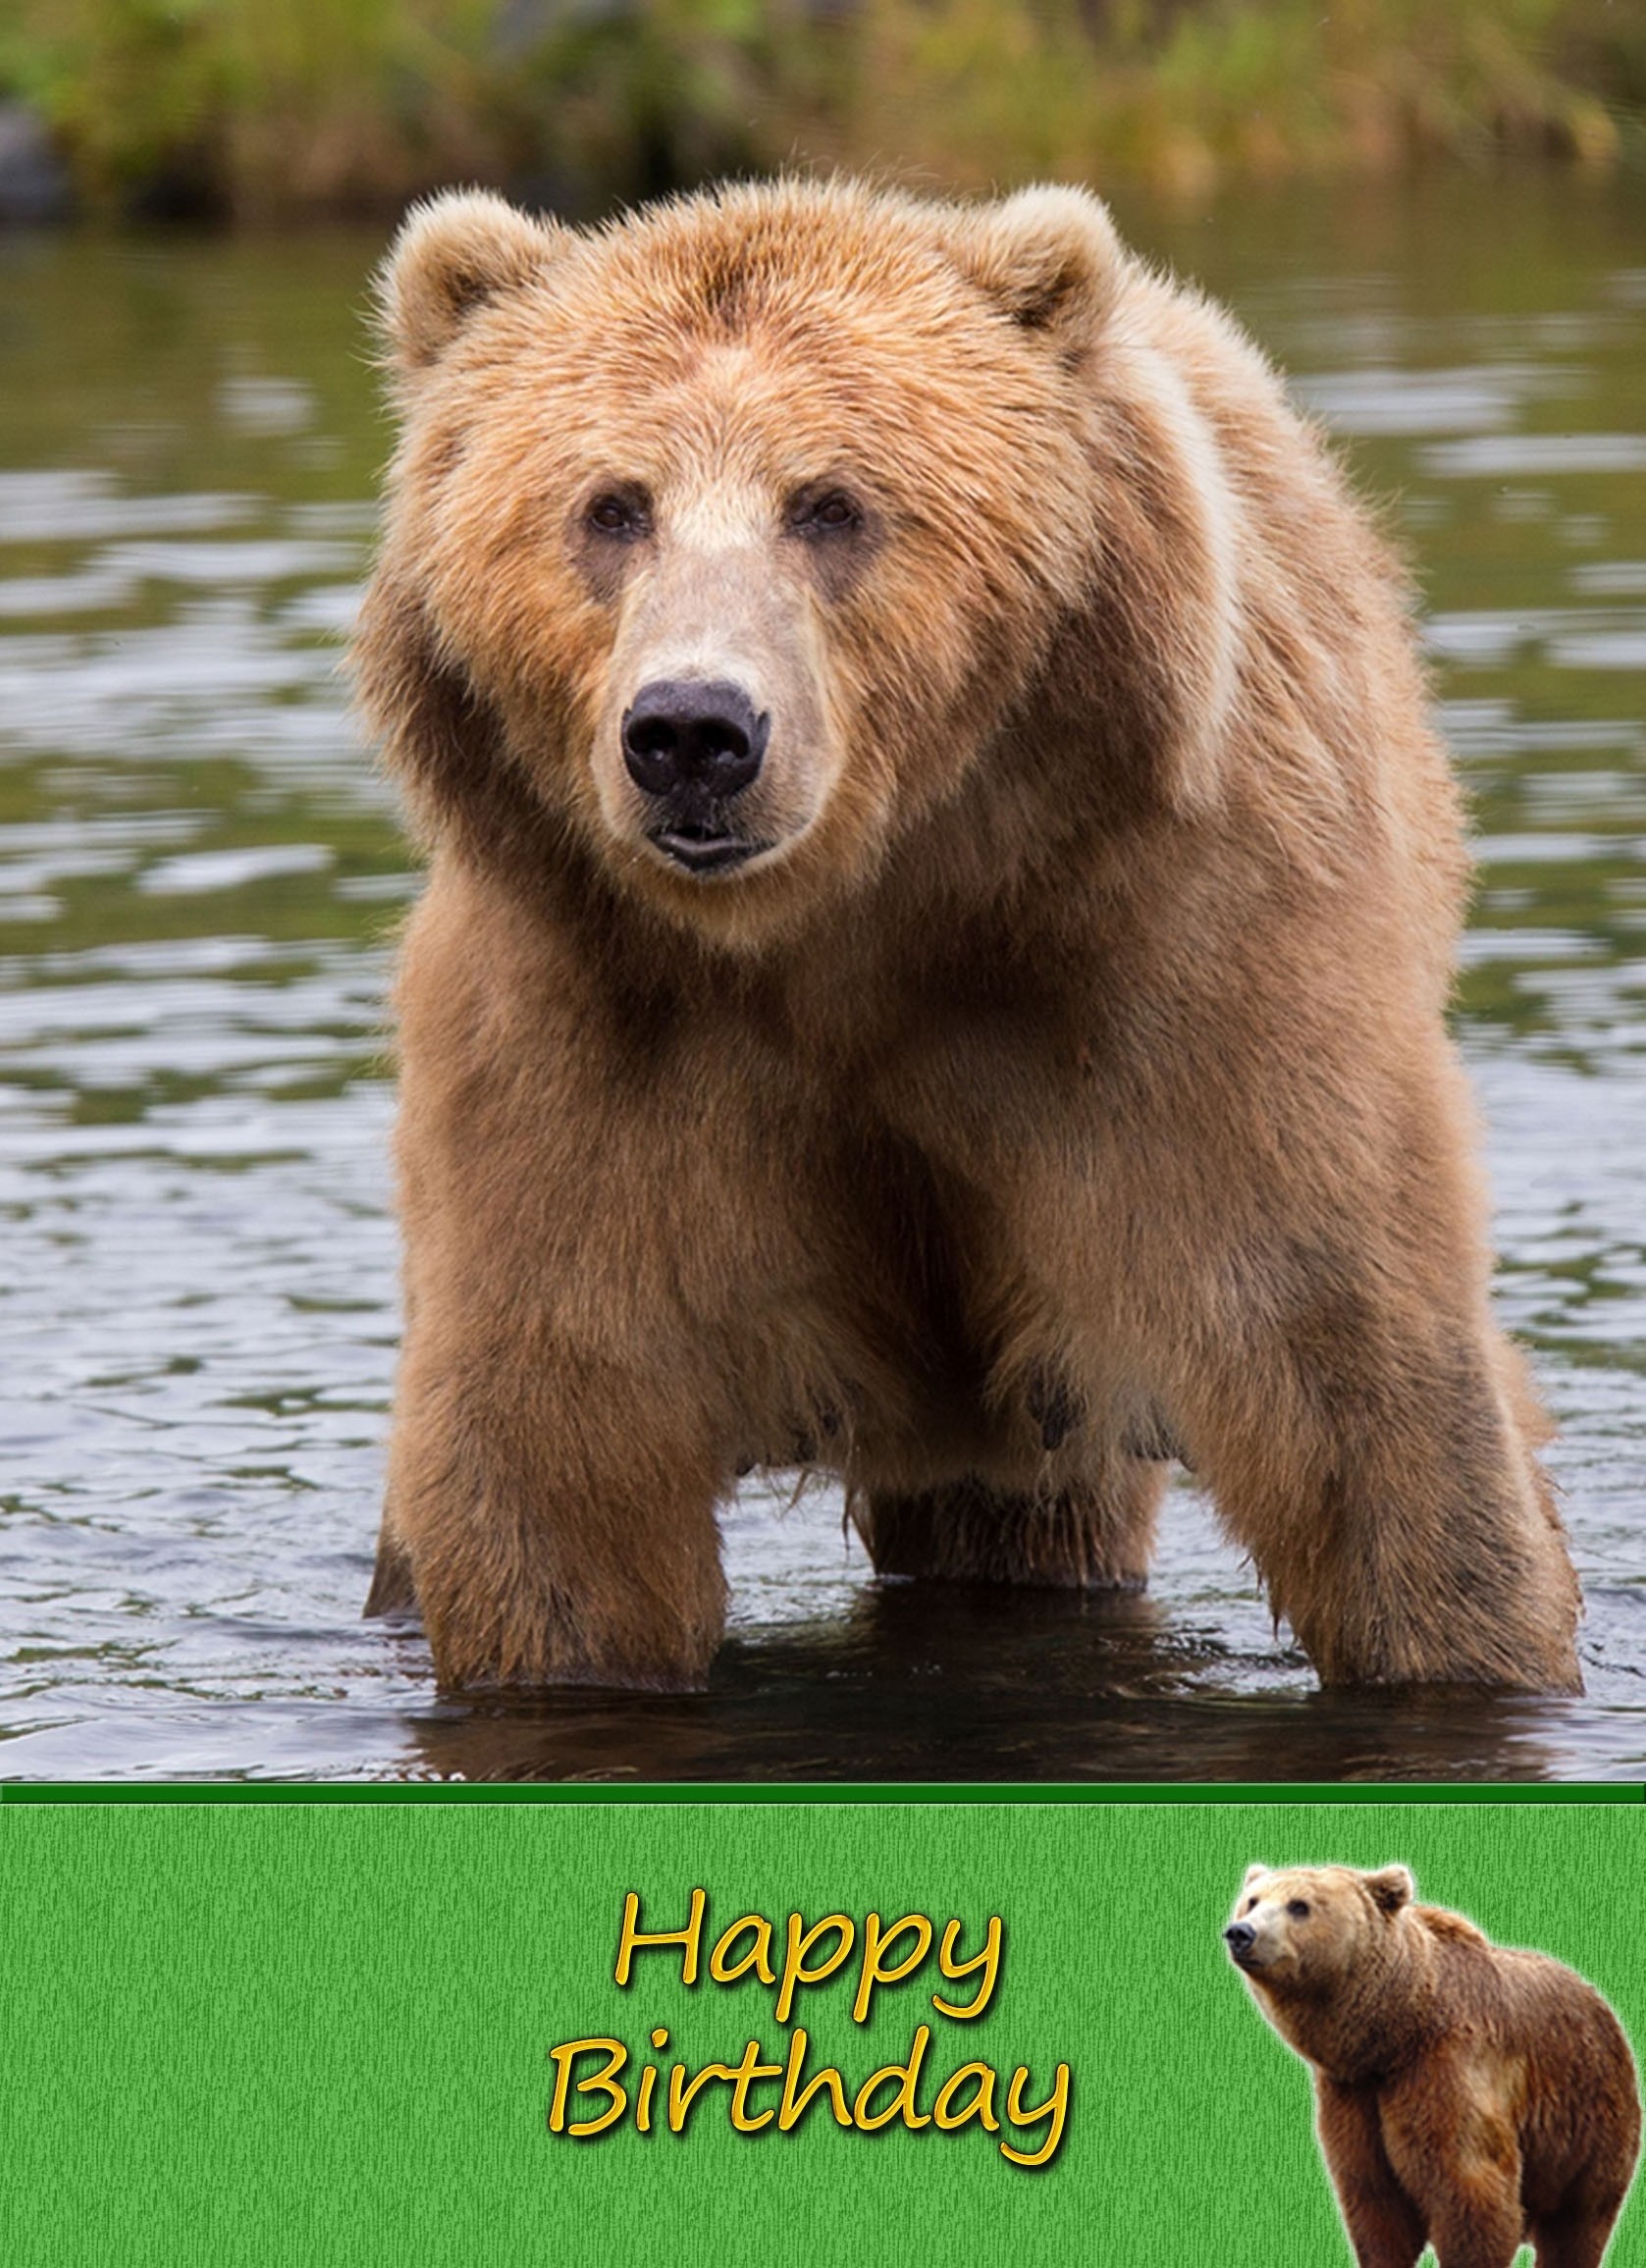 Grizzly Bear Birthday Card